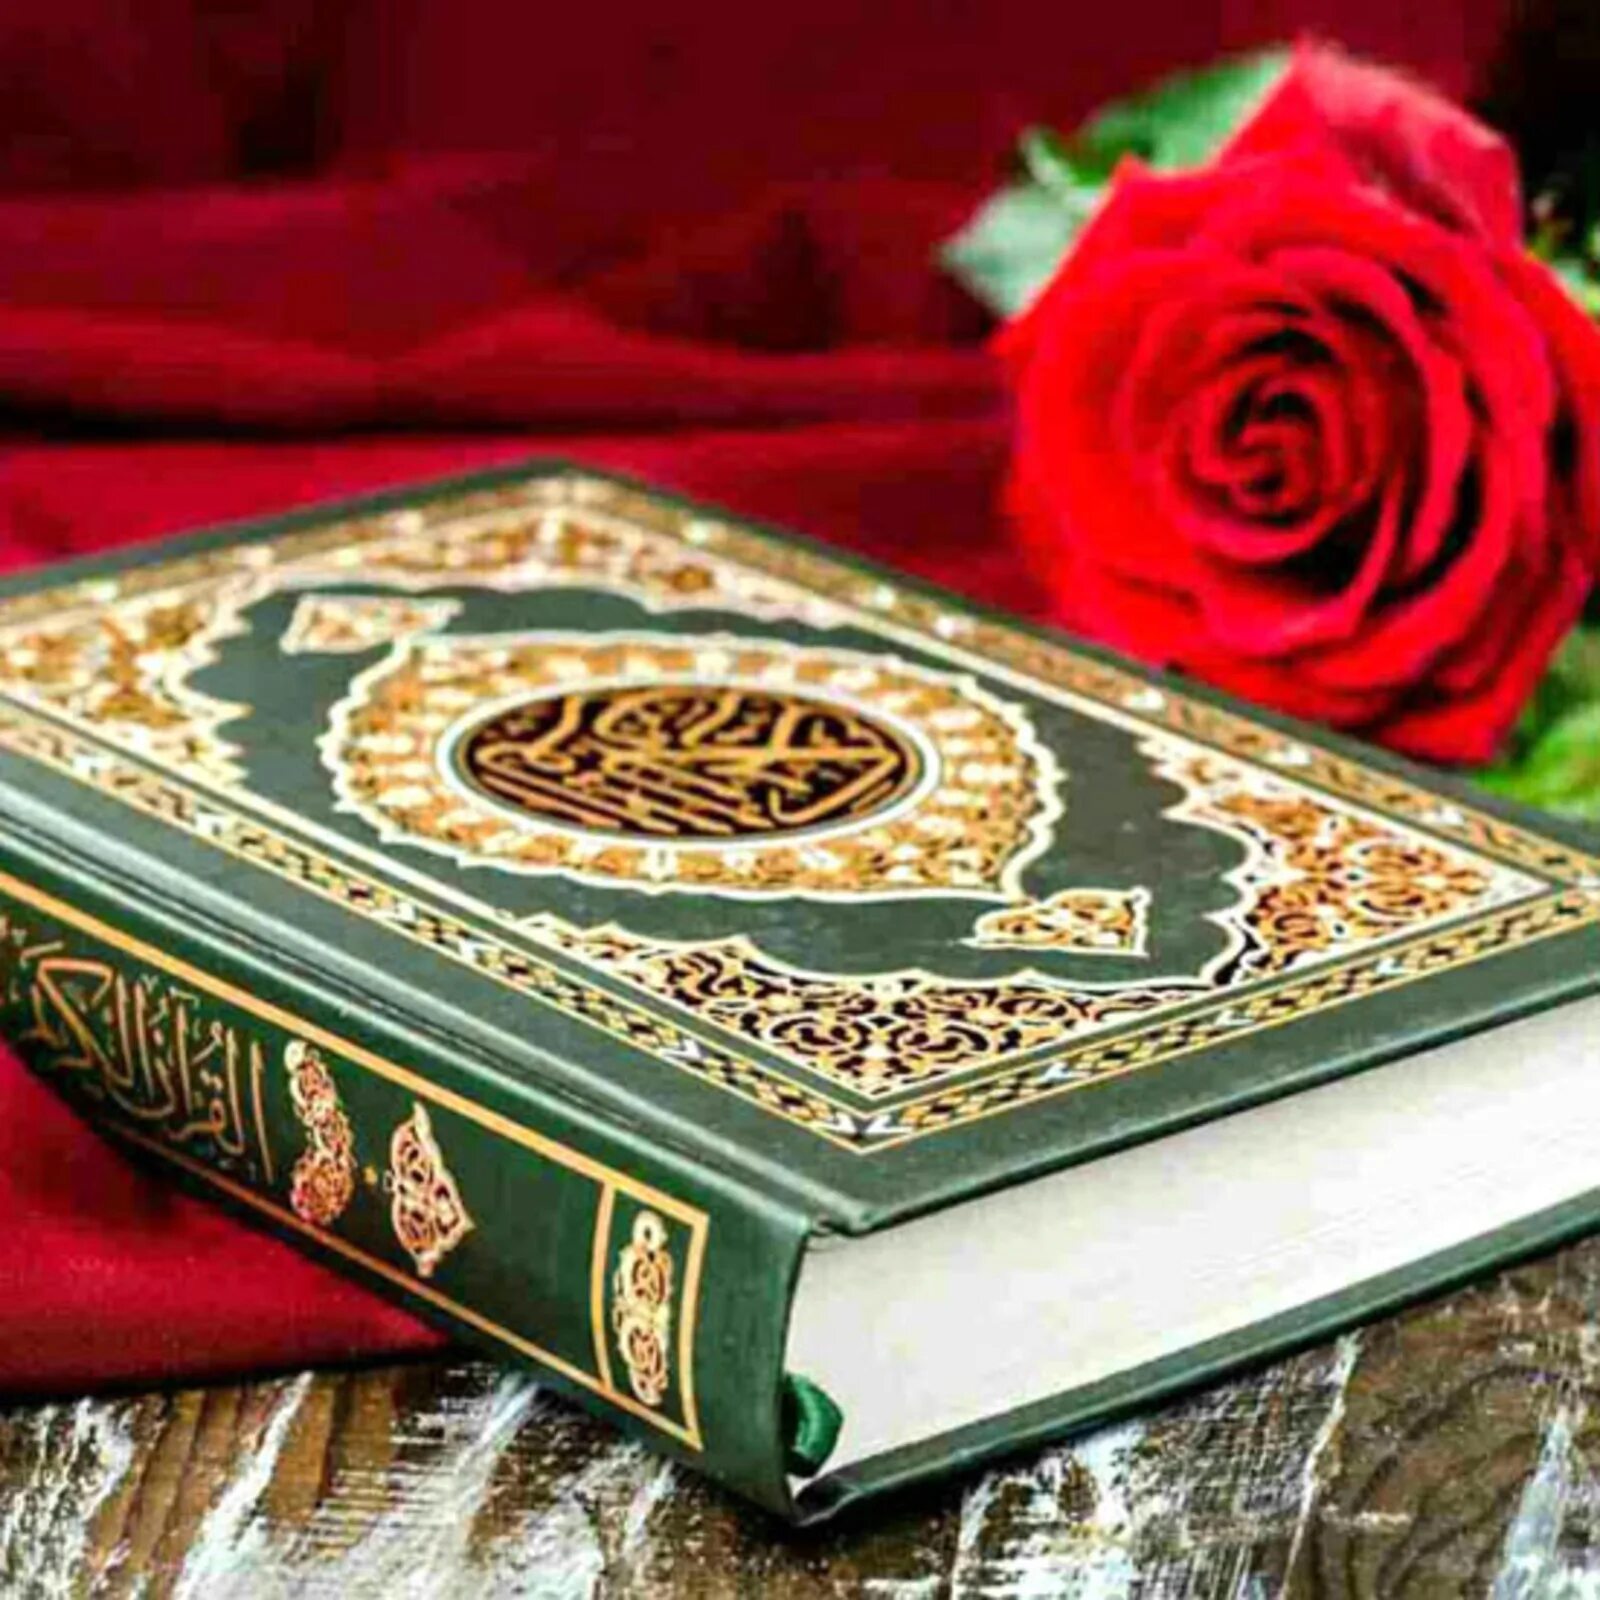 Quron kitob. Коран. Священный Коран. Коран и цветы. Самый красивый Коран.